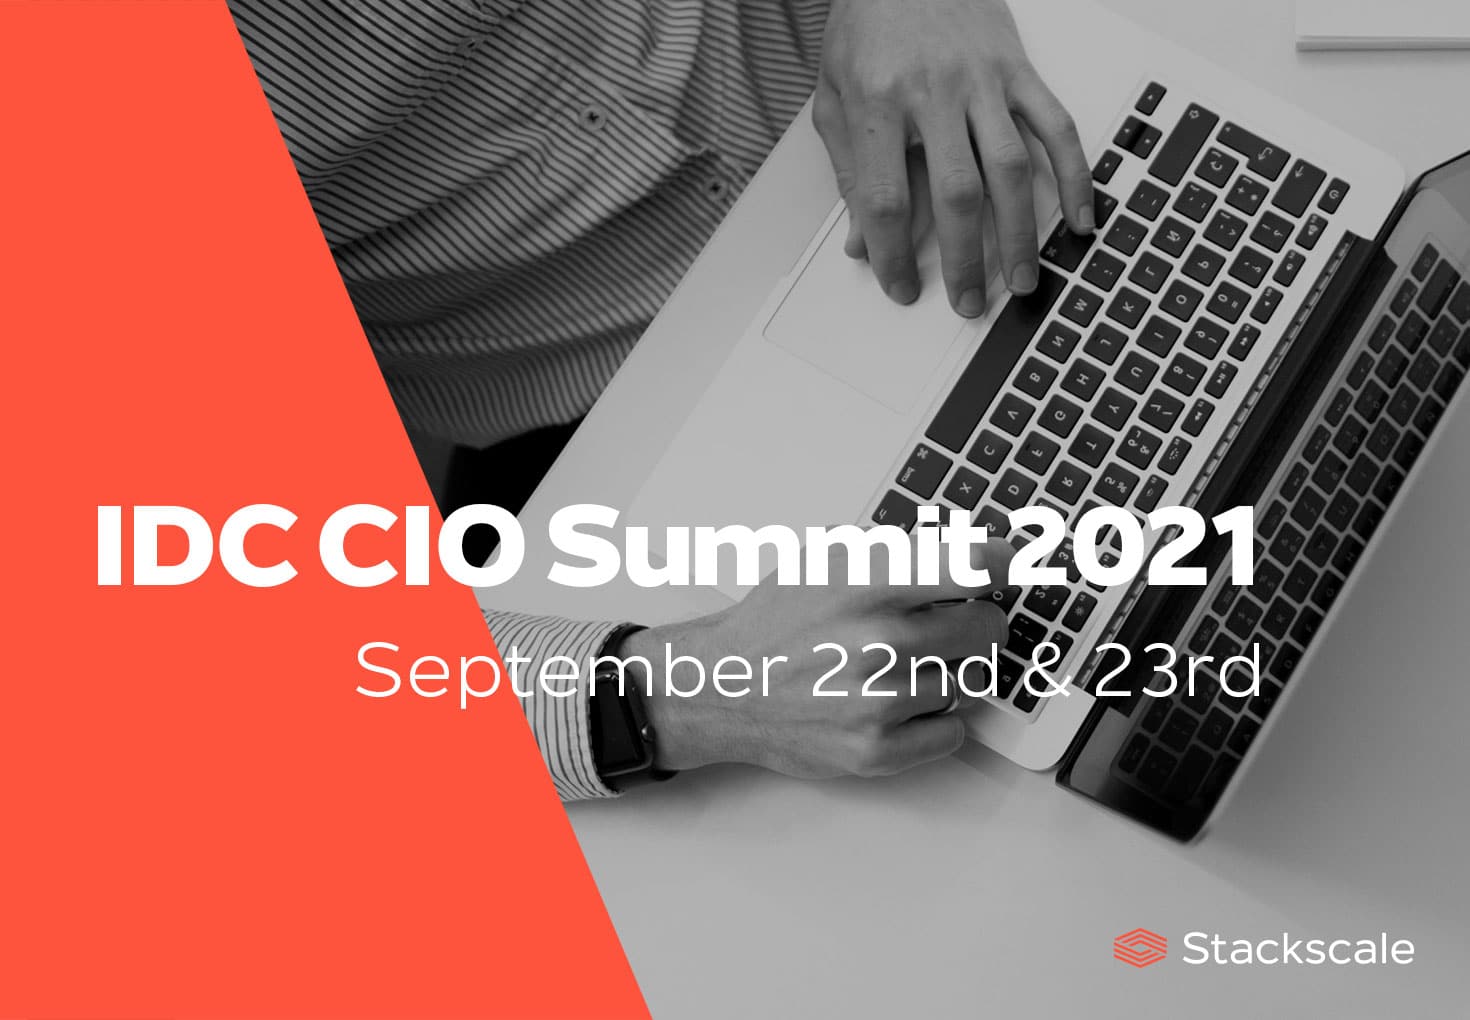 Stackscale at the IDC CIO Summit 2021